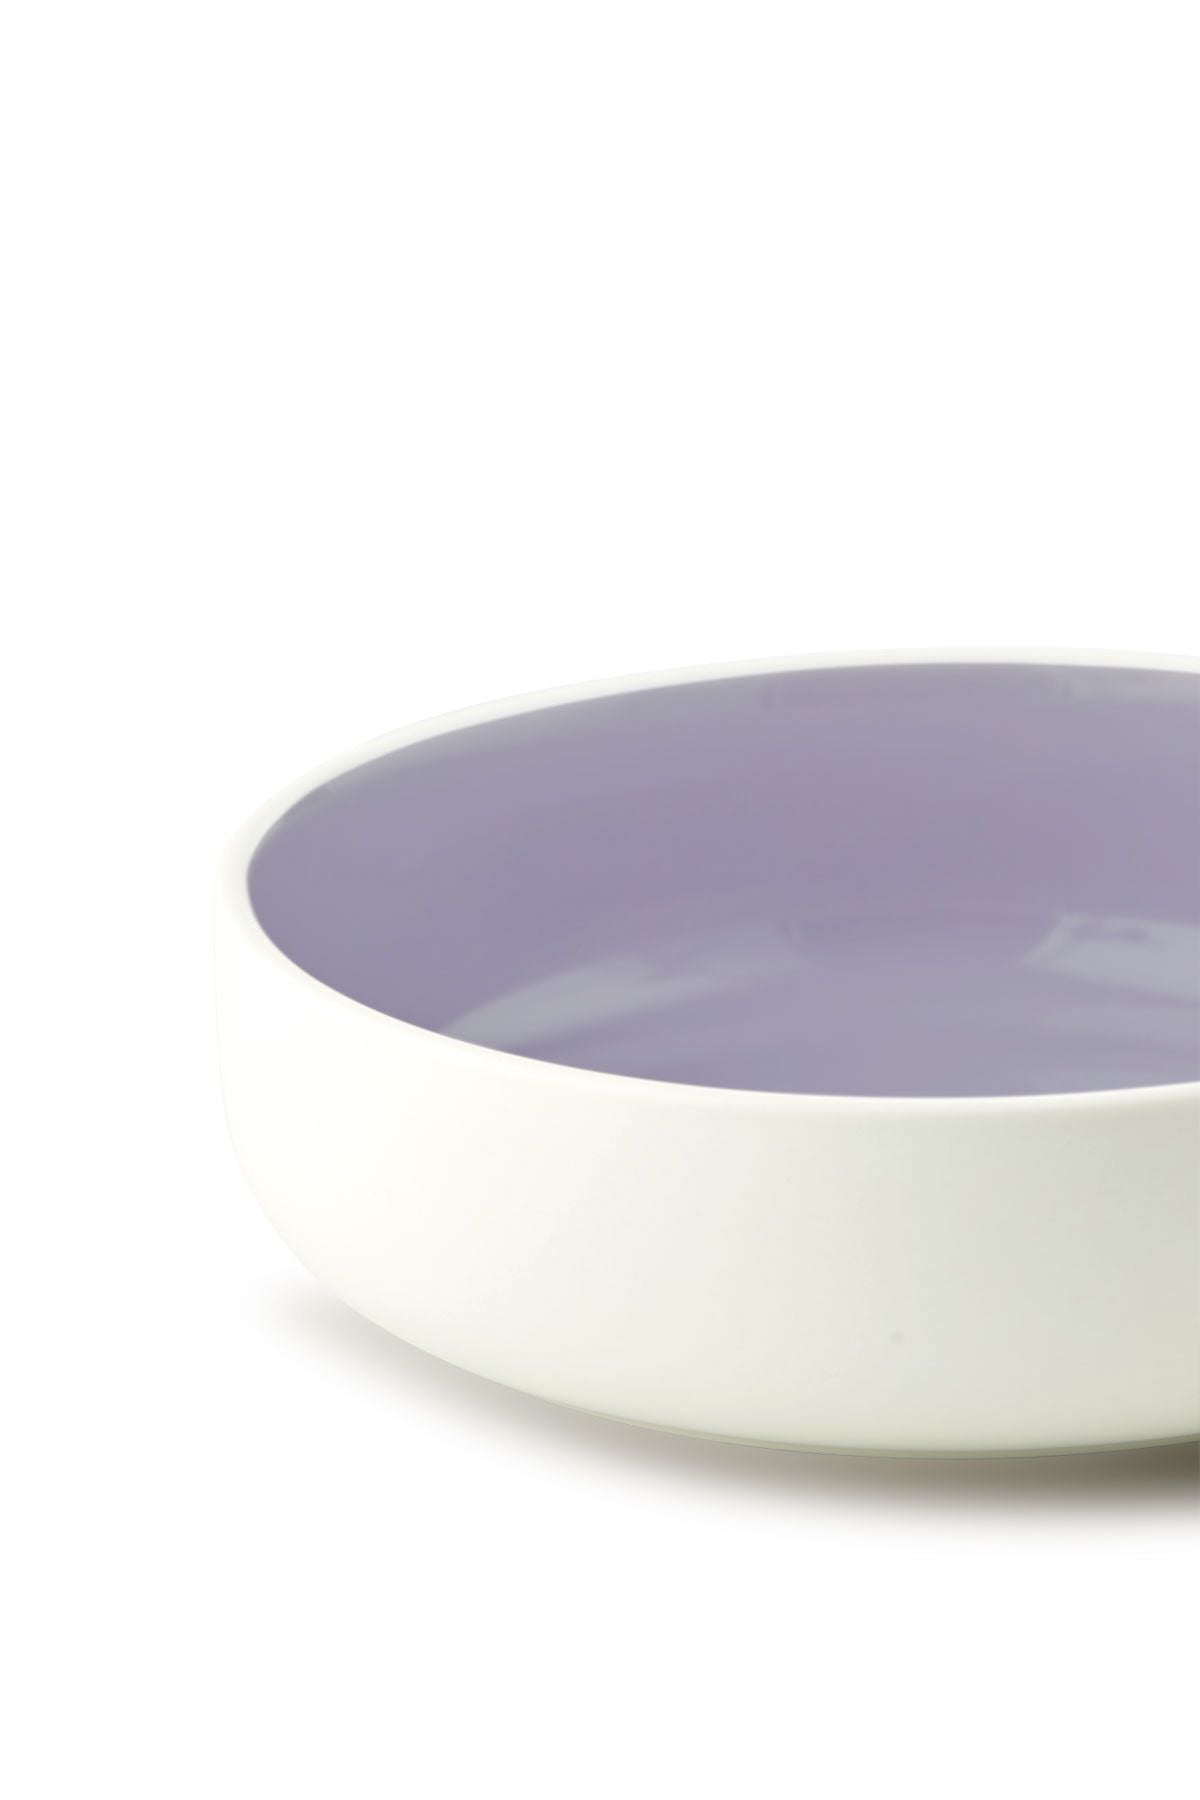 Studio over Clayware Serving Bowl, Ivory/Light Purple